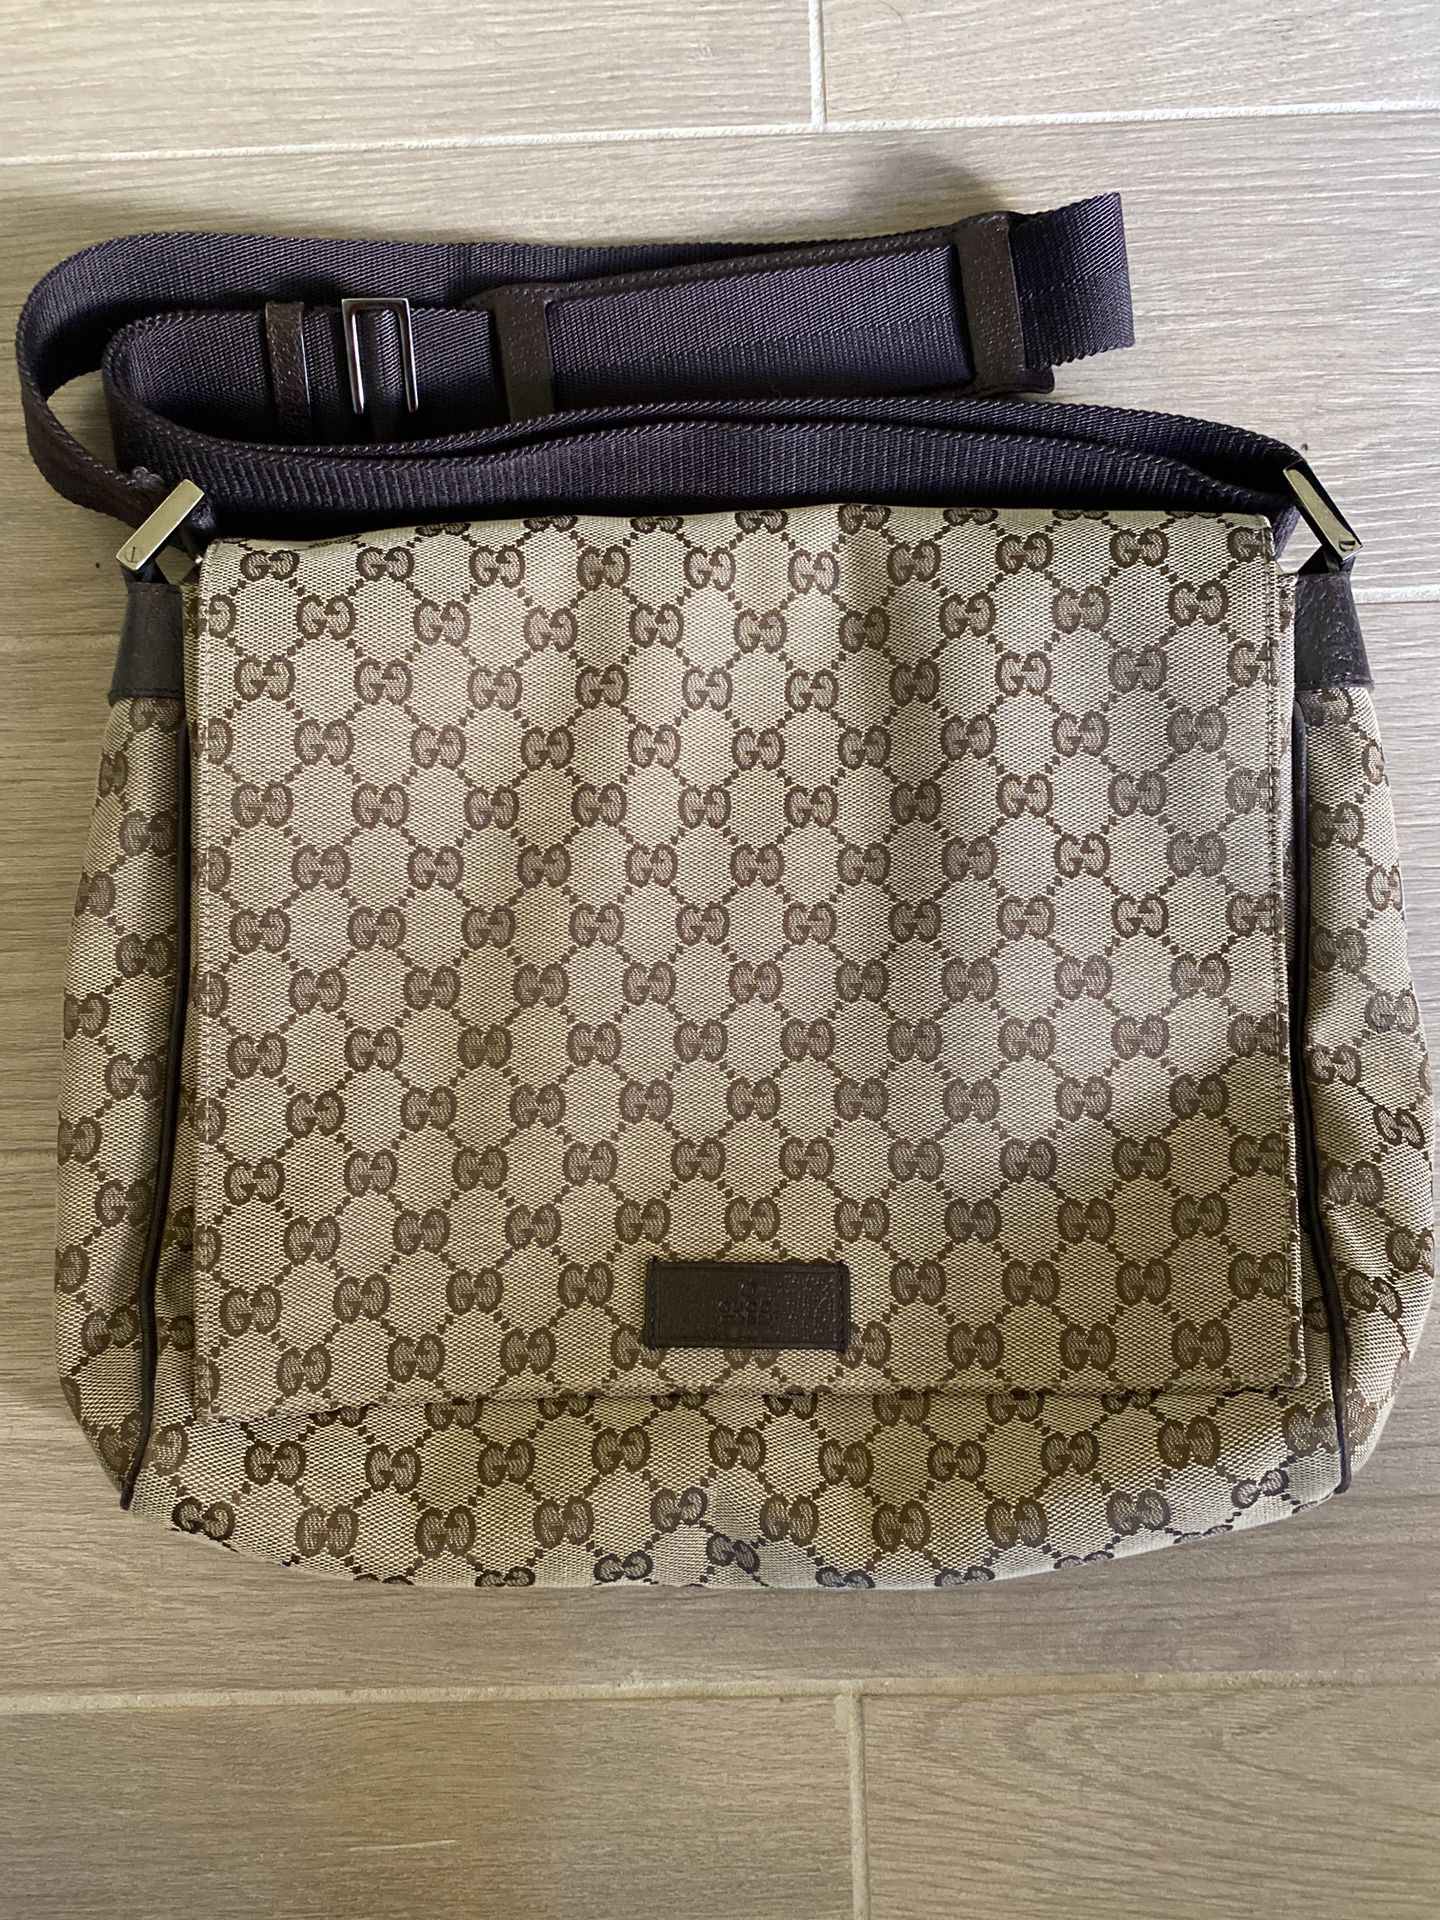 Used Gucci Messenger Bag